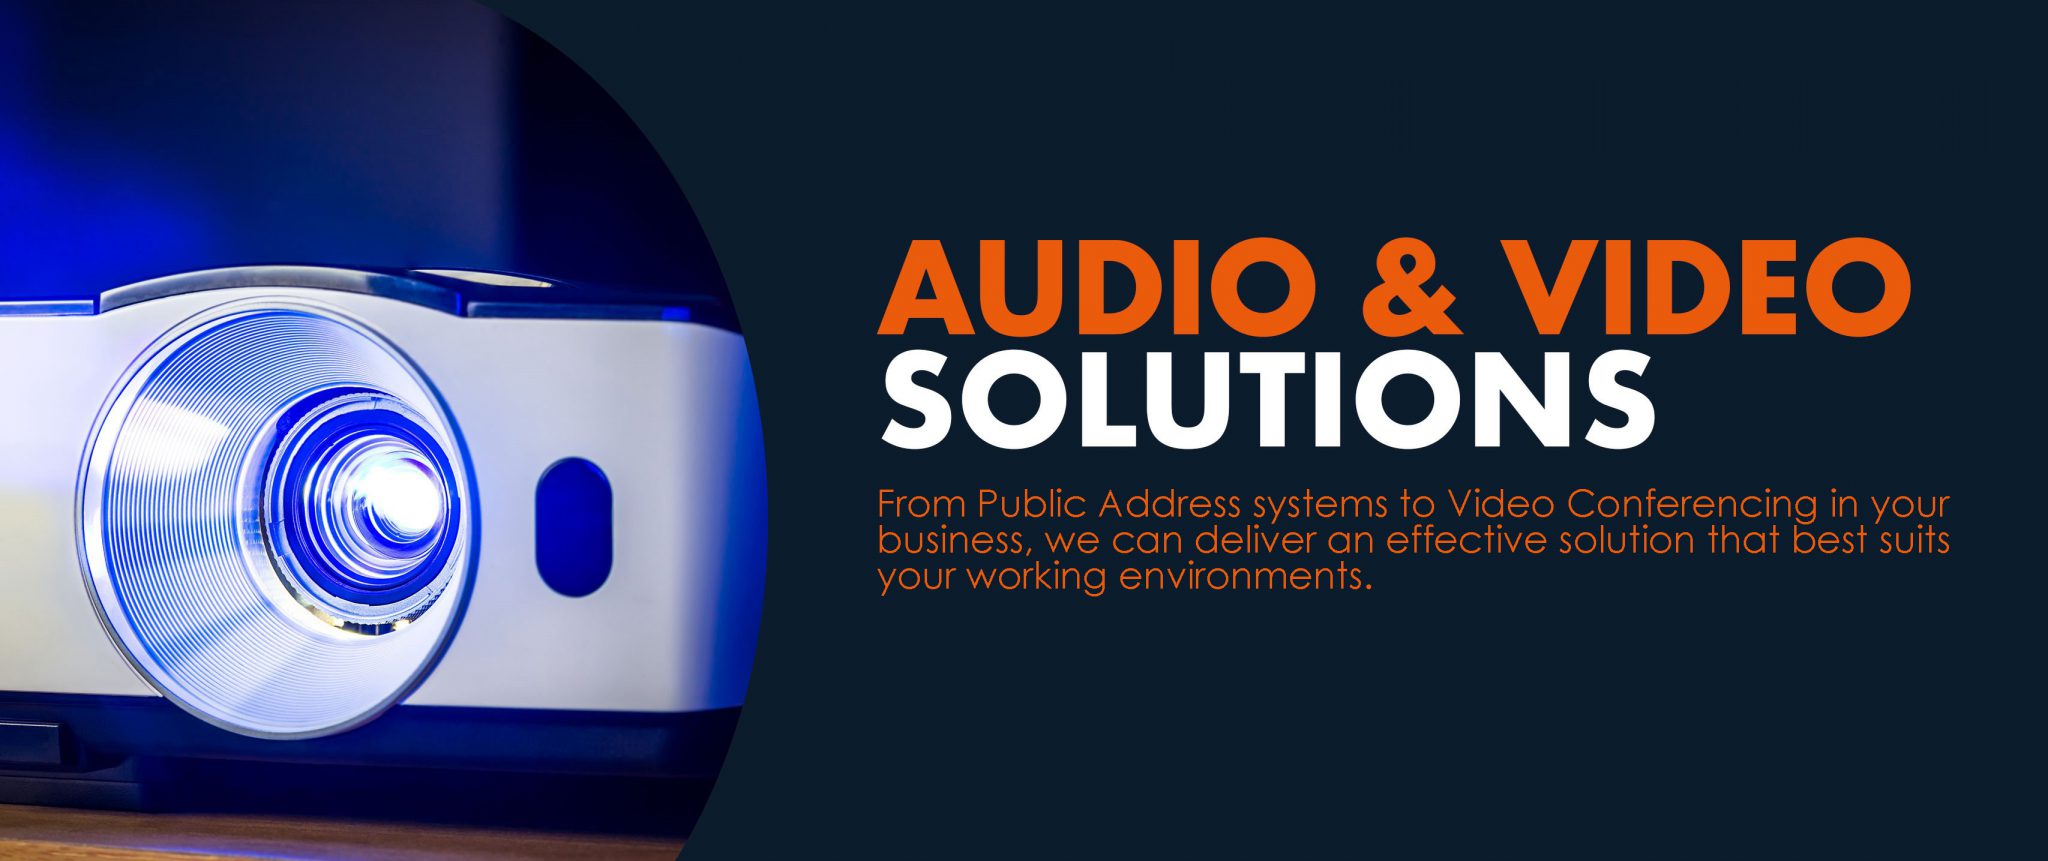 Audio Visual solutions